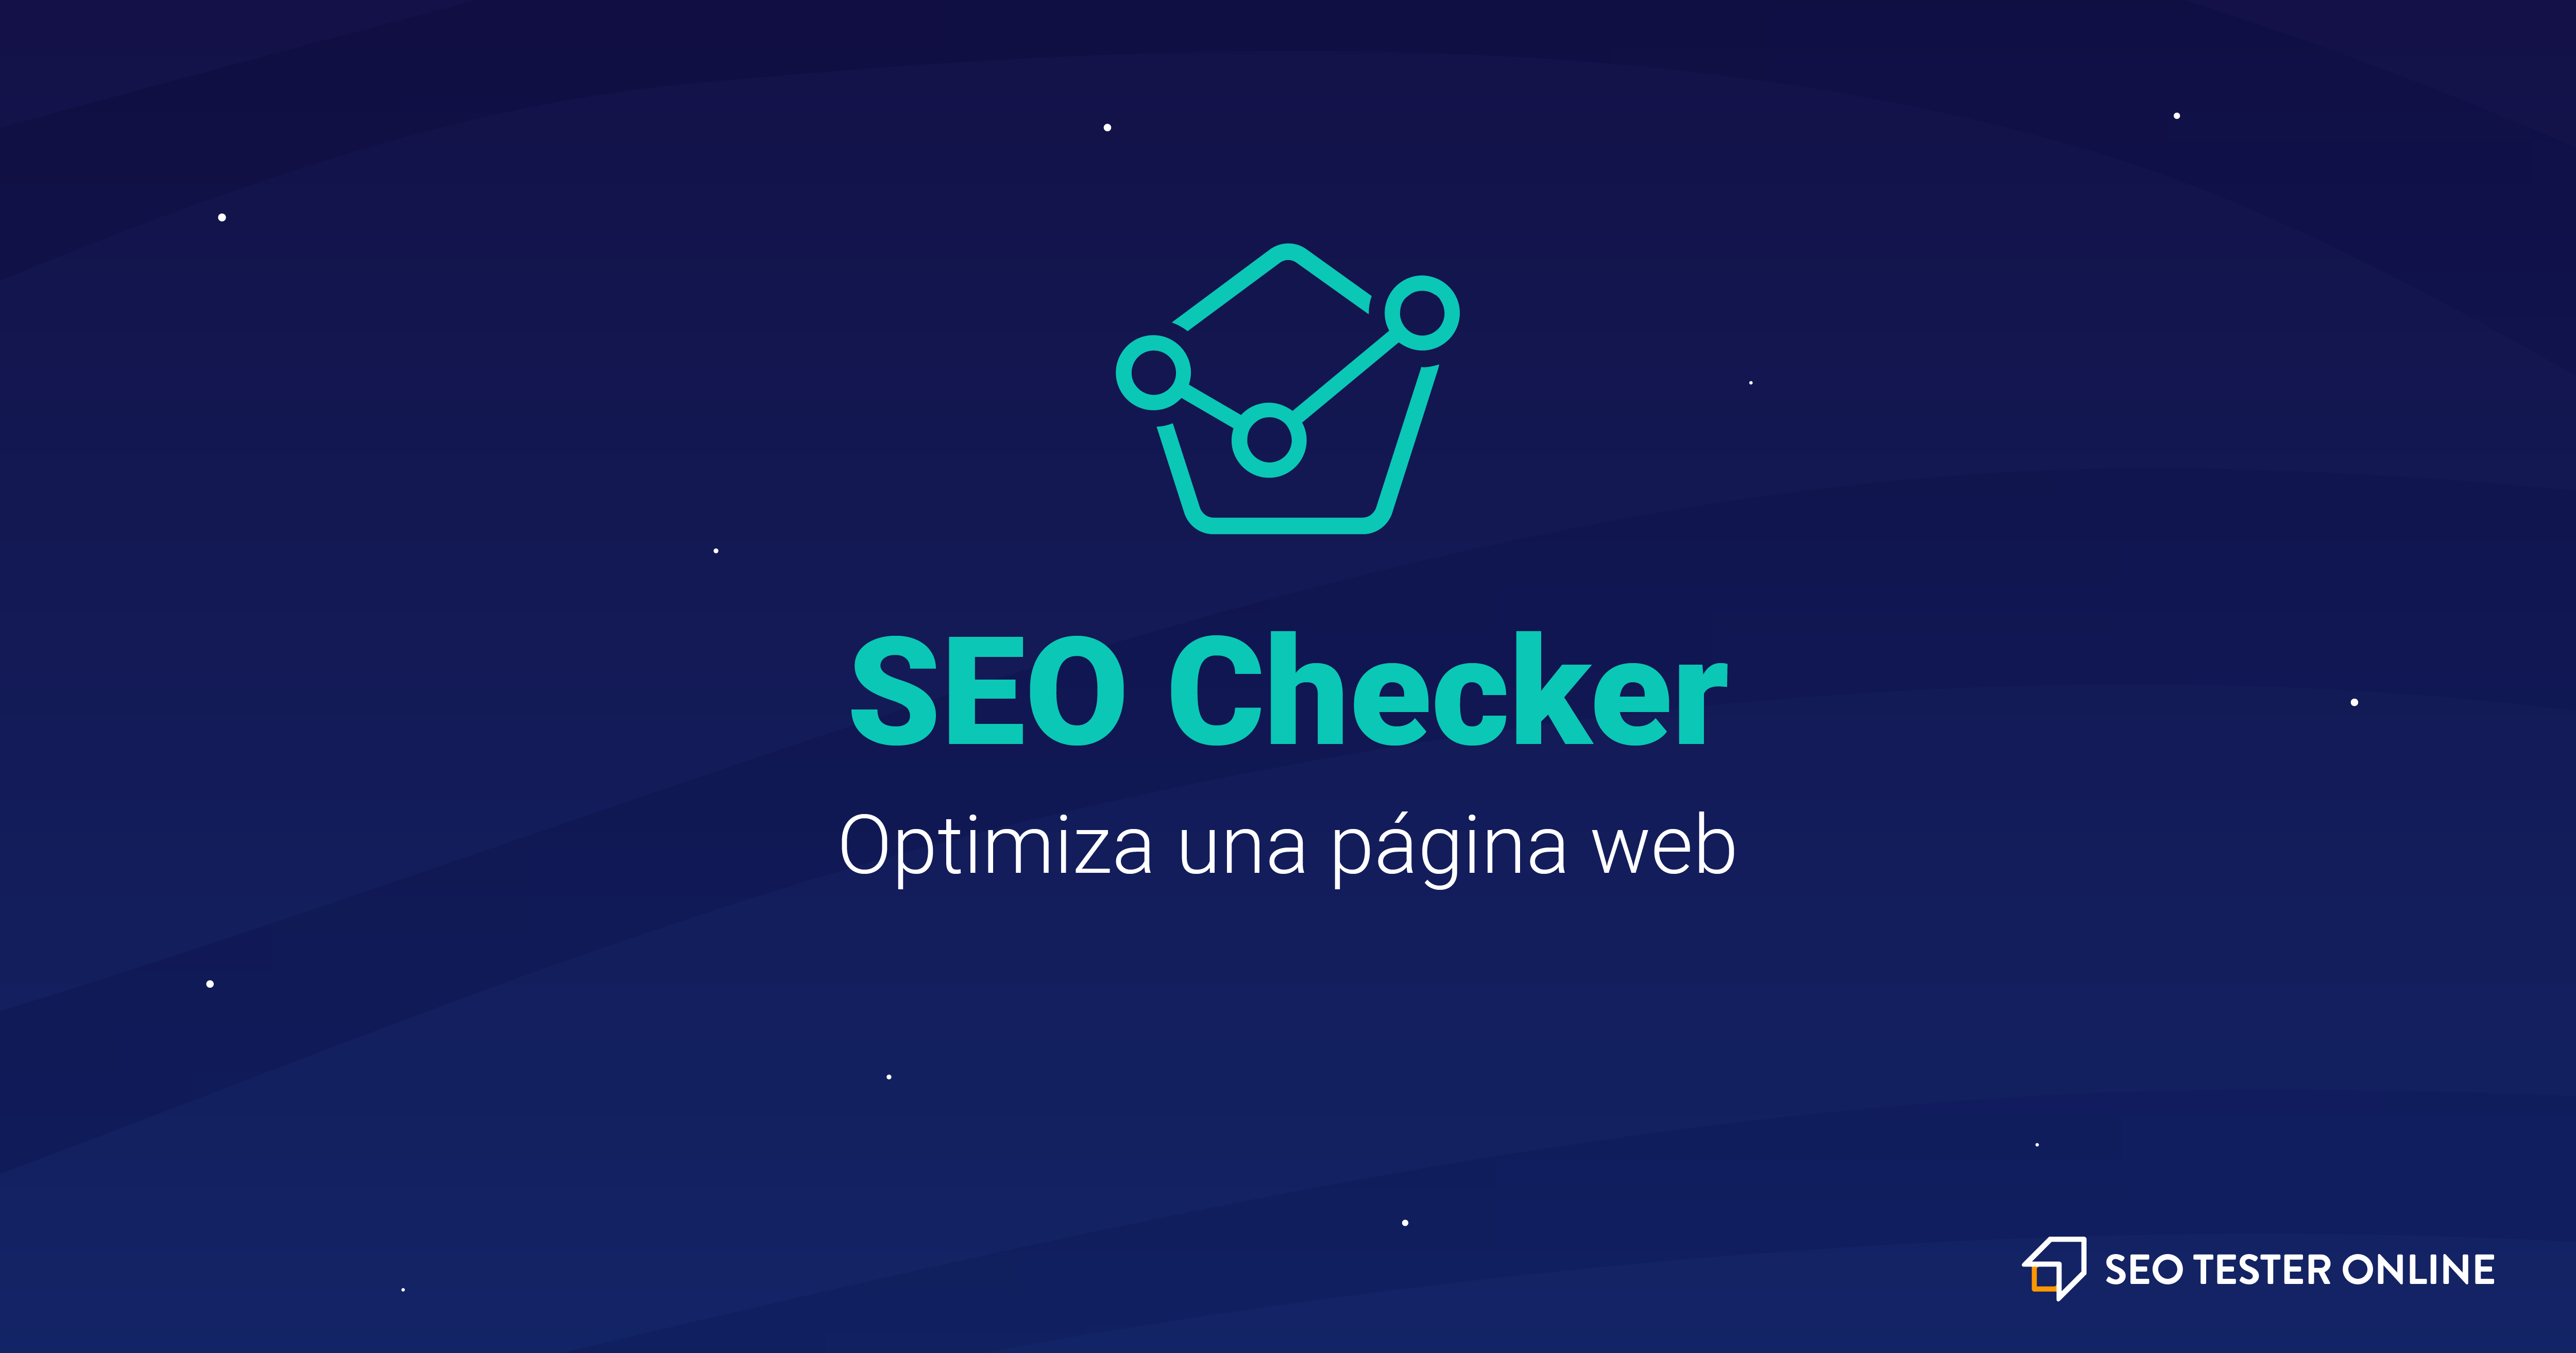 SEO Checker 7.5 for ios instal free